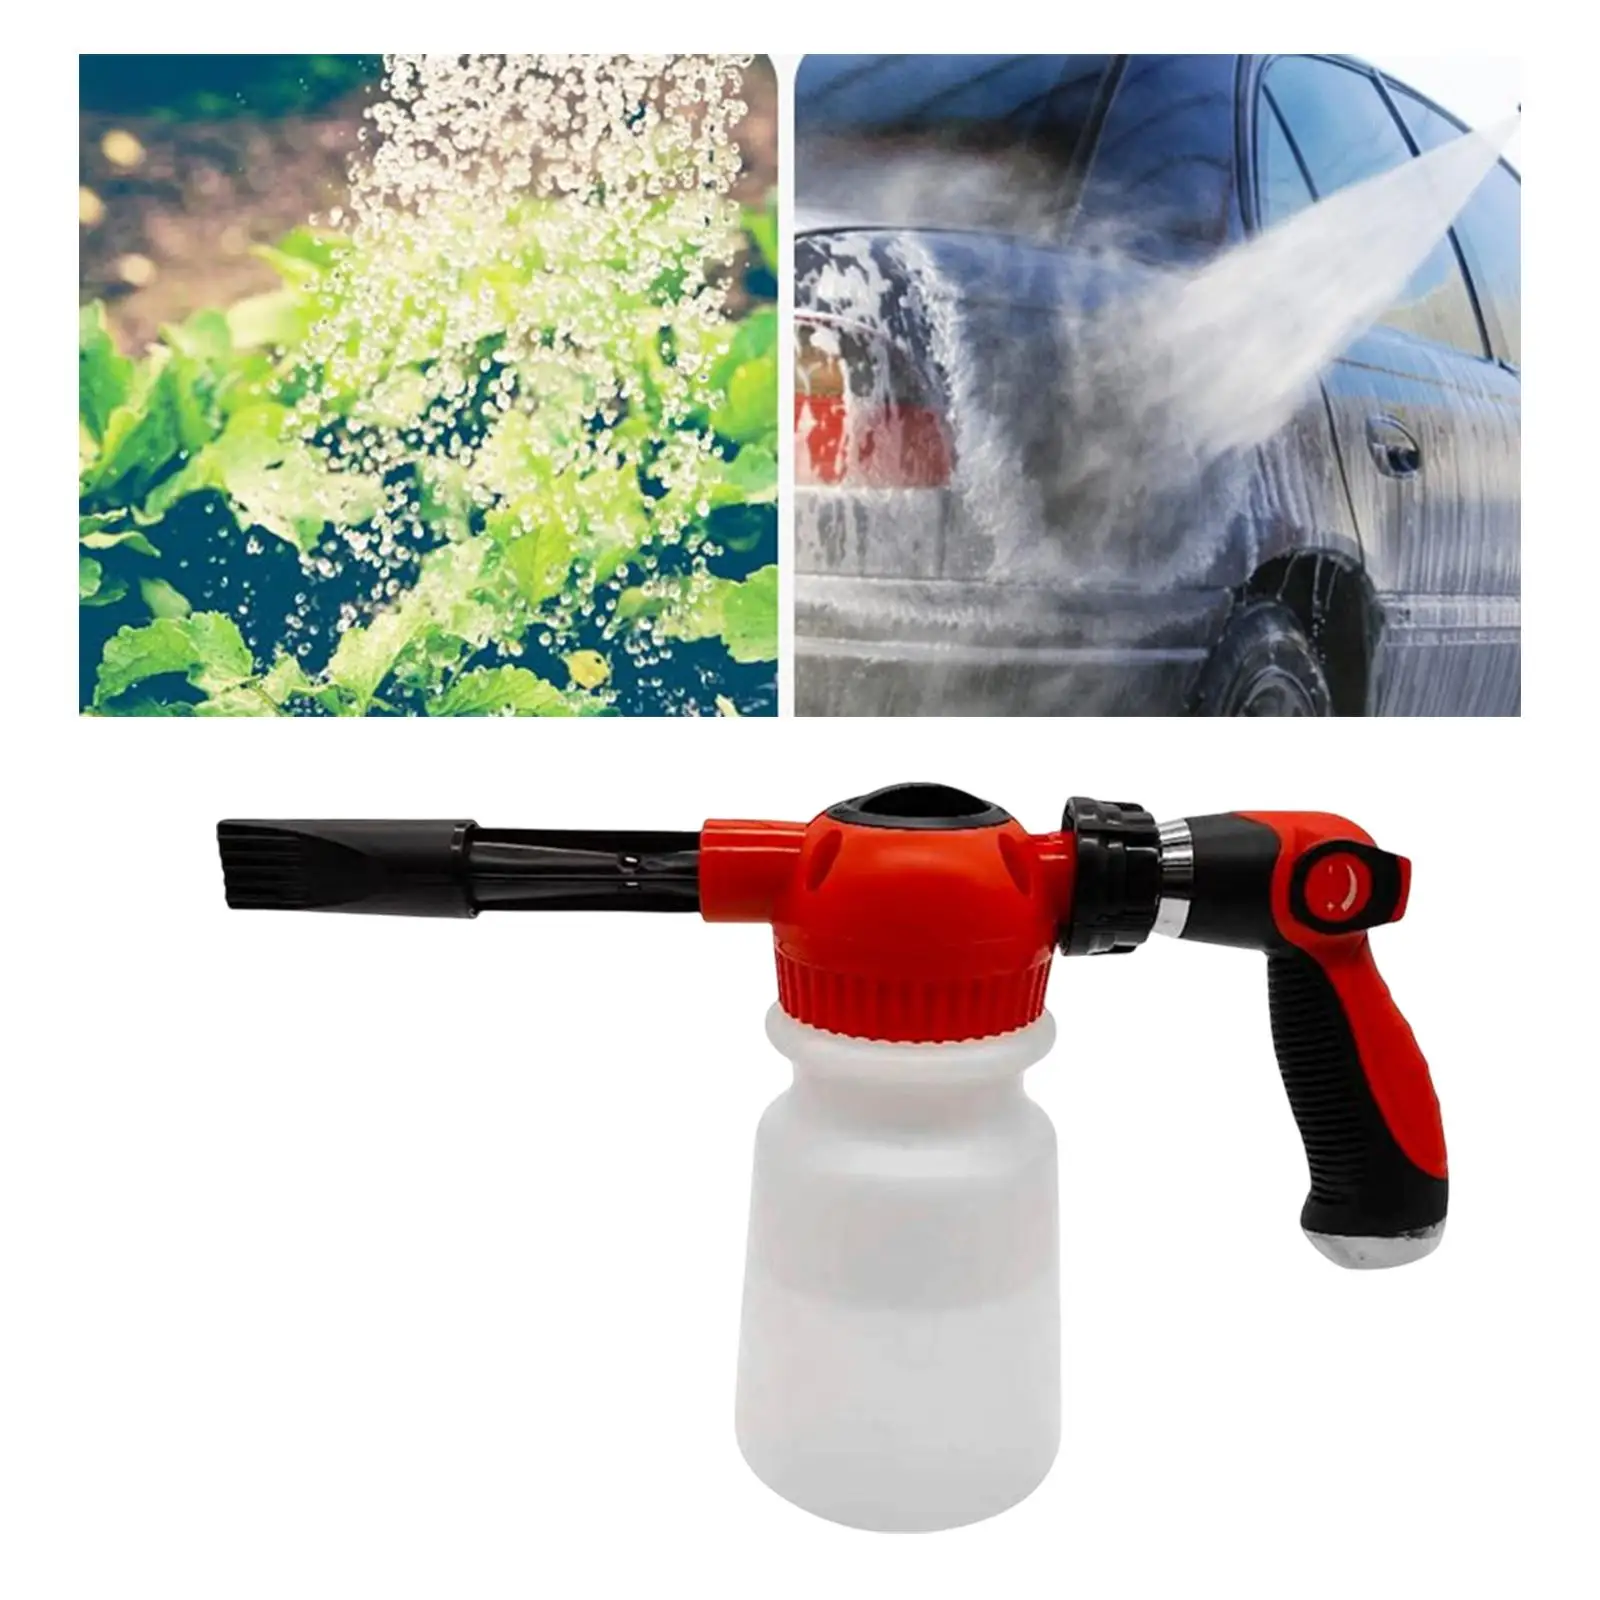 Car Wash Pump Manual Foaming Sprayer Gardening Sprayer for Automobiles Window Outdoor